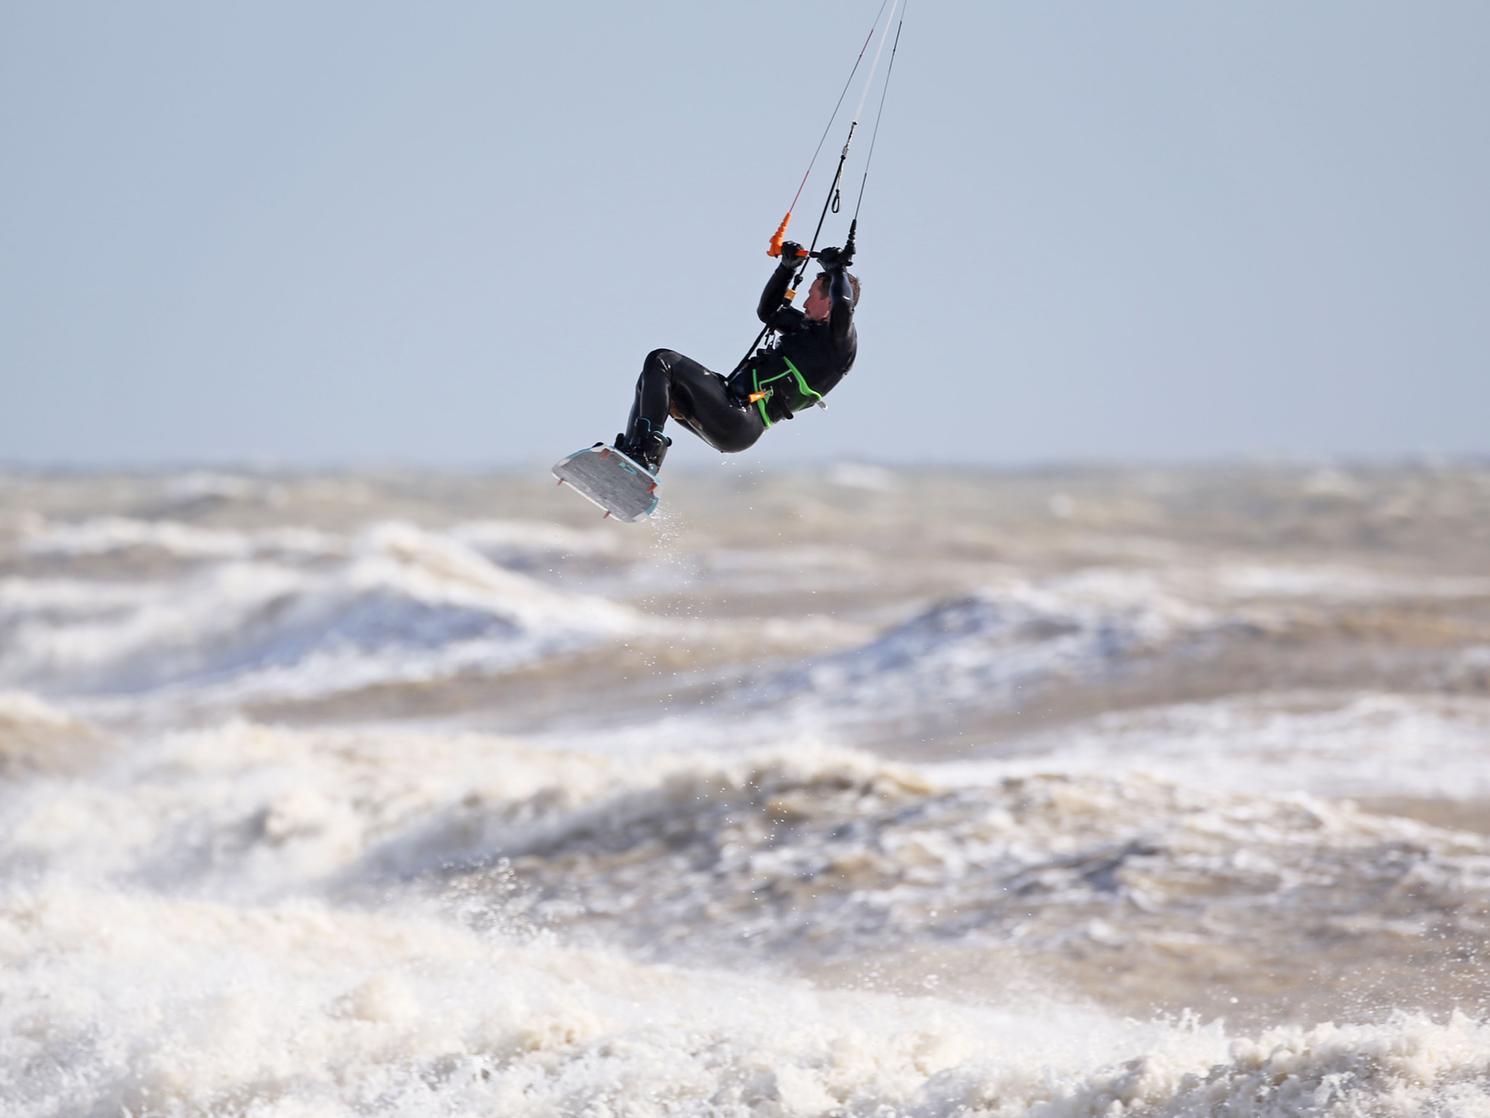 Kitesurfers at Goring in Worthing, West Sussex